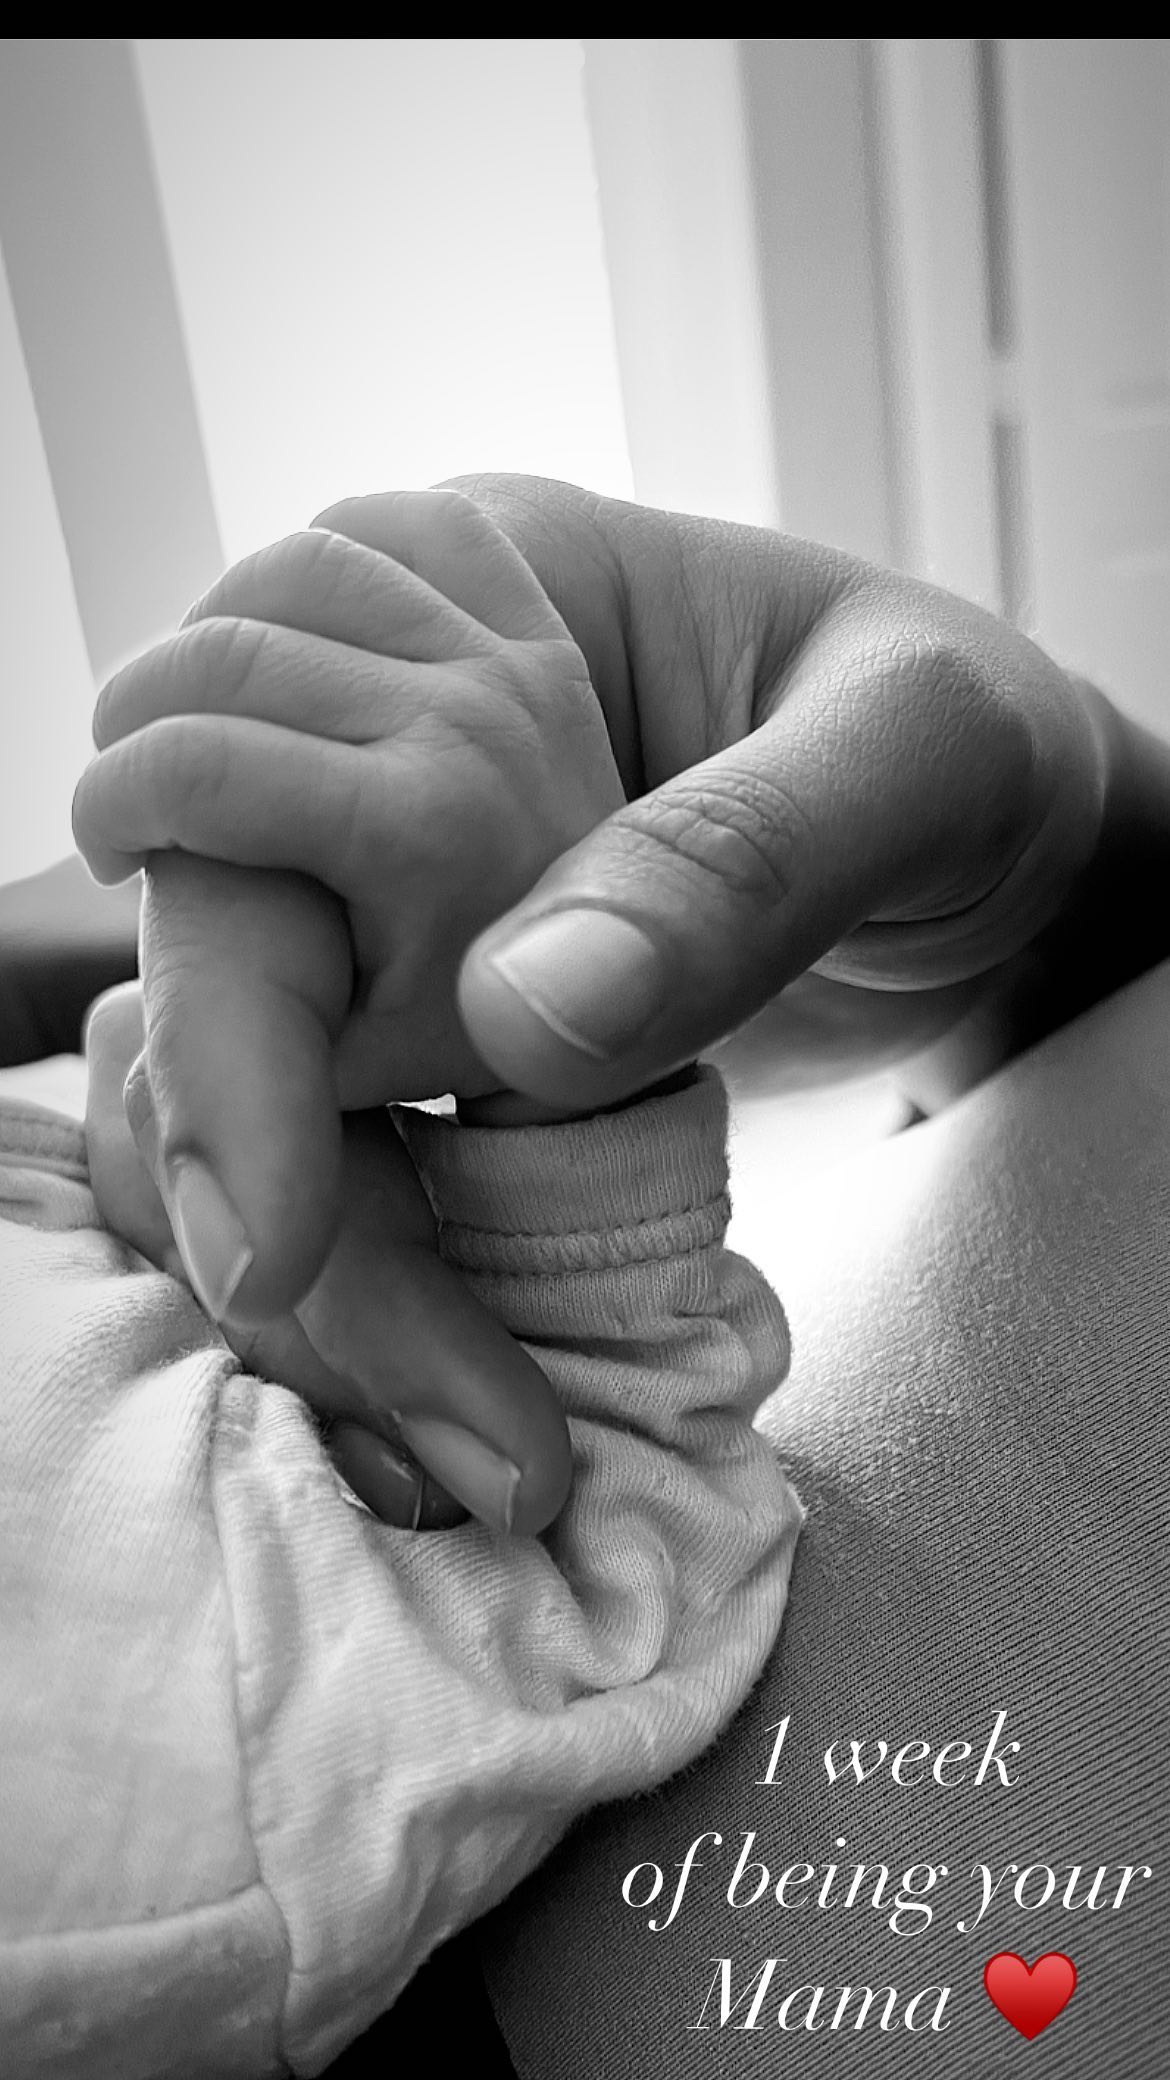 Ileanan D'Cruz shares ann adorable photo holding her newborn's hand